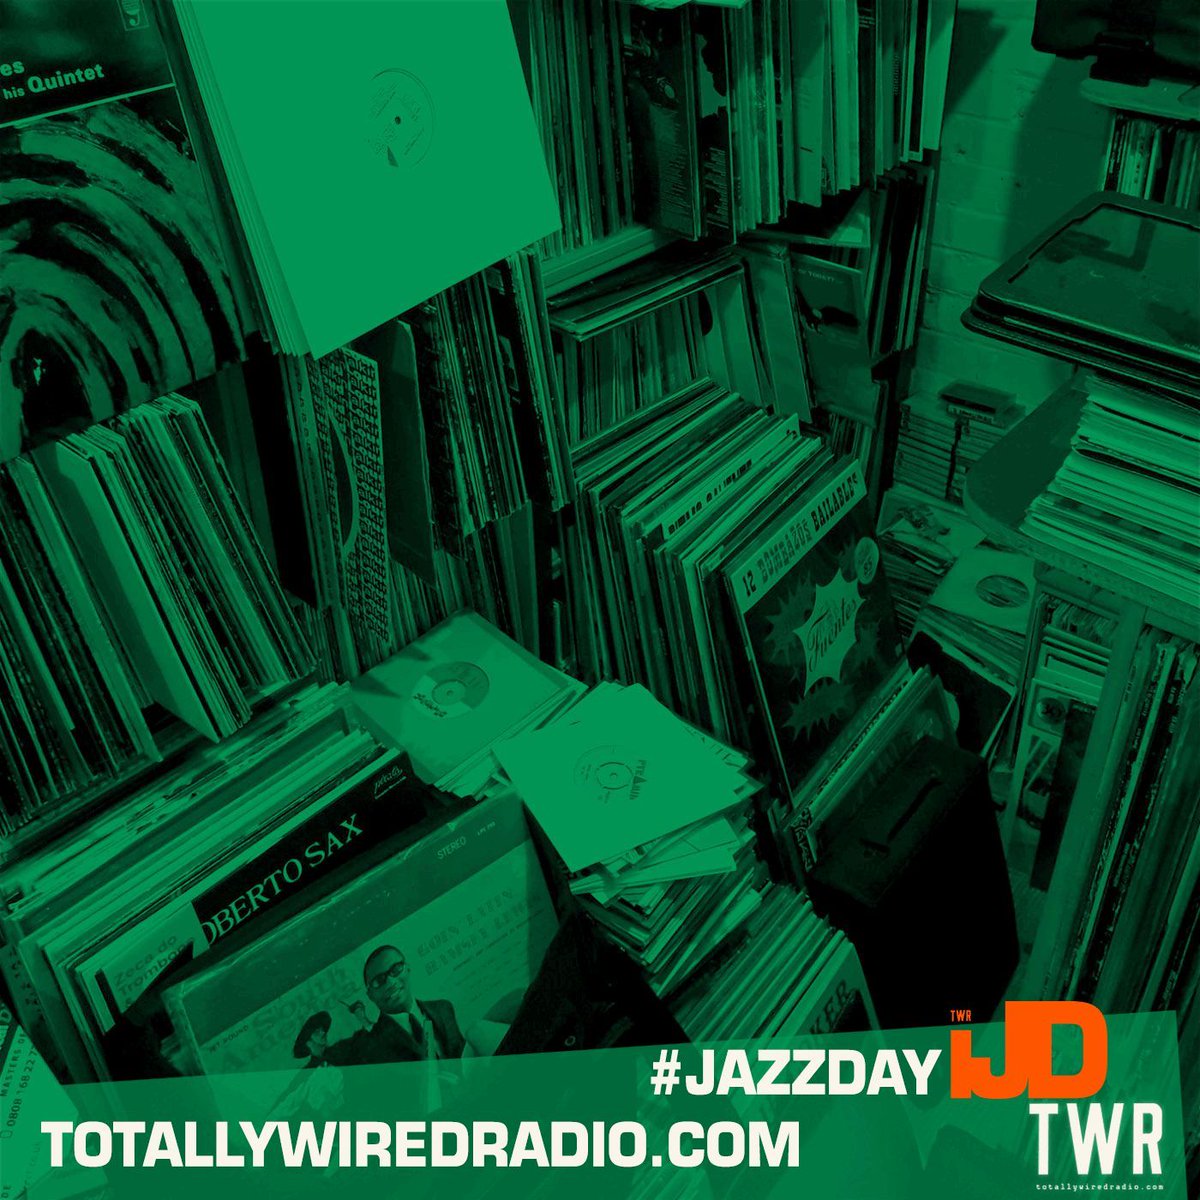 The Music Room #JAZZDAY w/ Steve Aspey #startingsoon on #TotallyWiredRadio Listen @ Link in bio. 
-
#MusicIsLife #London
-
#World #Global #Jazz #Soul #Funk #VocalJazz